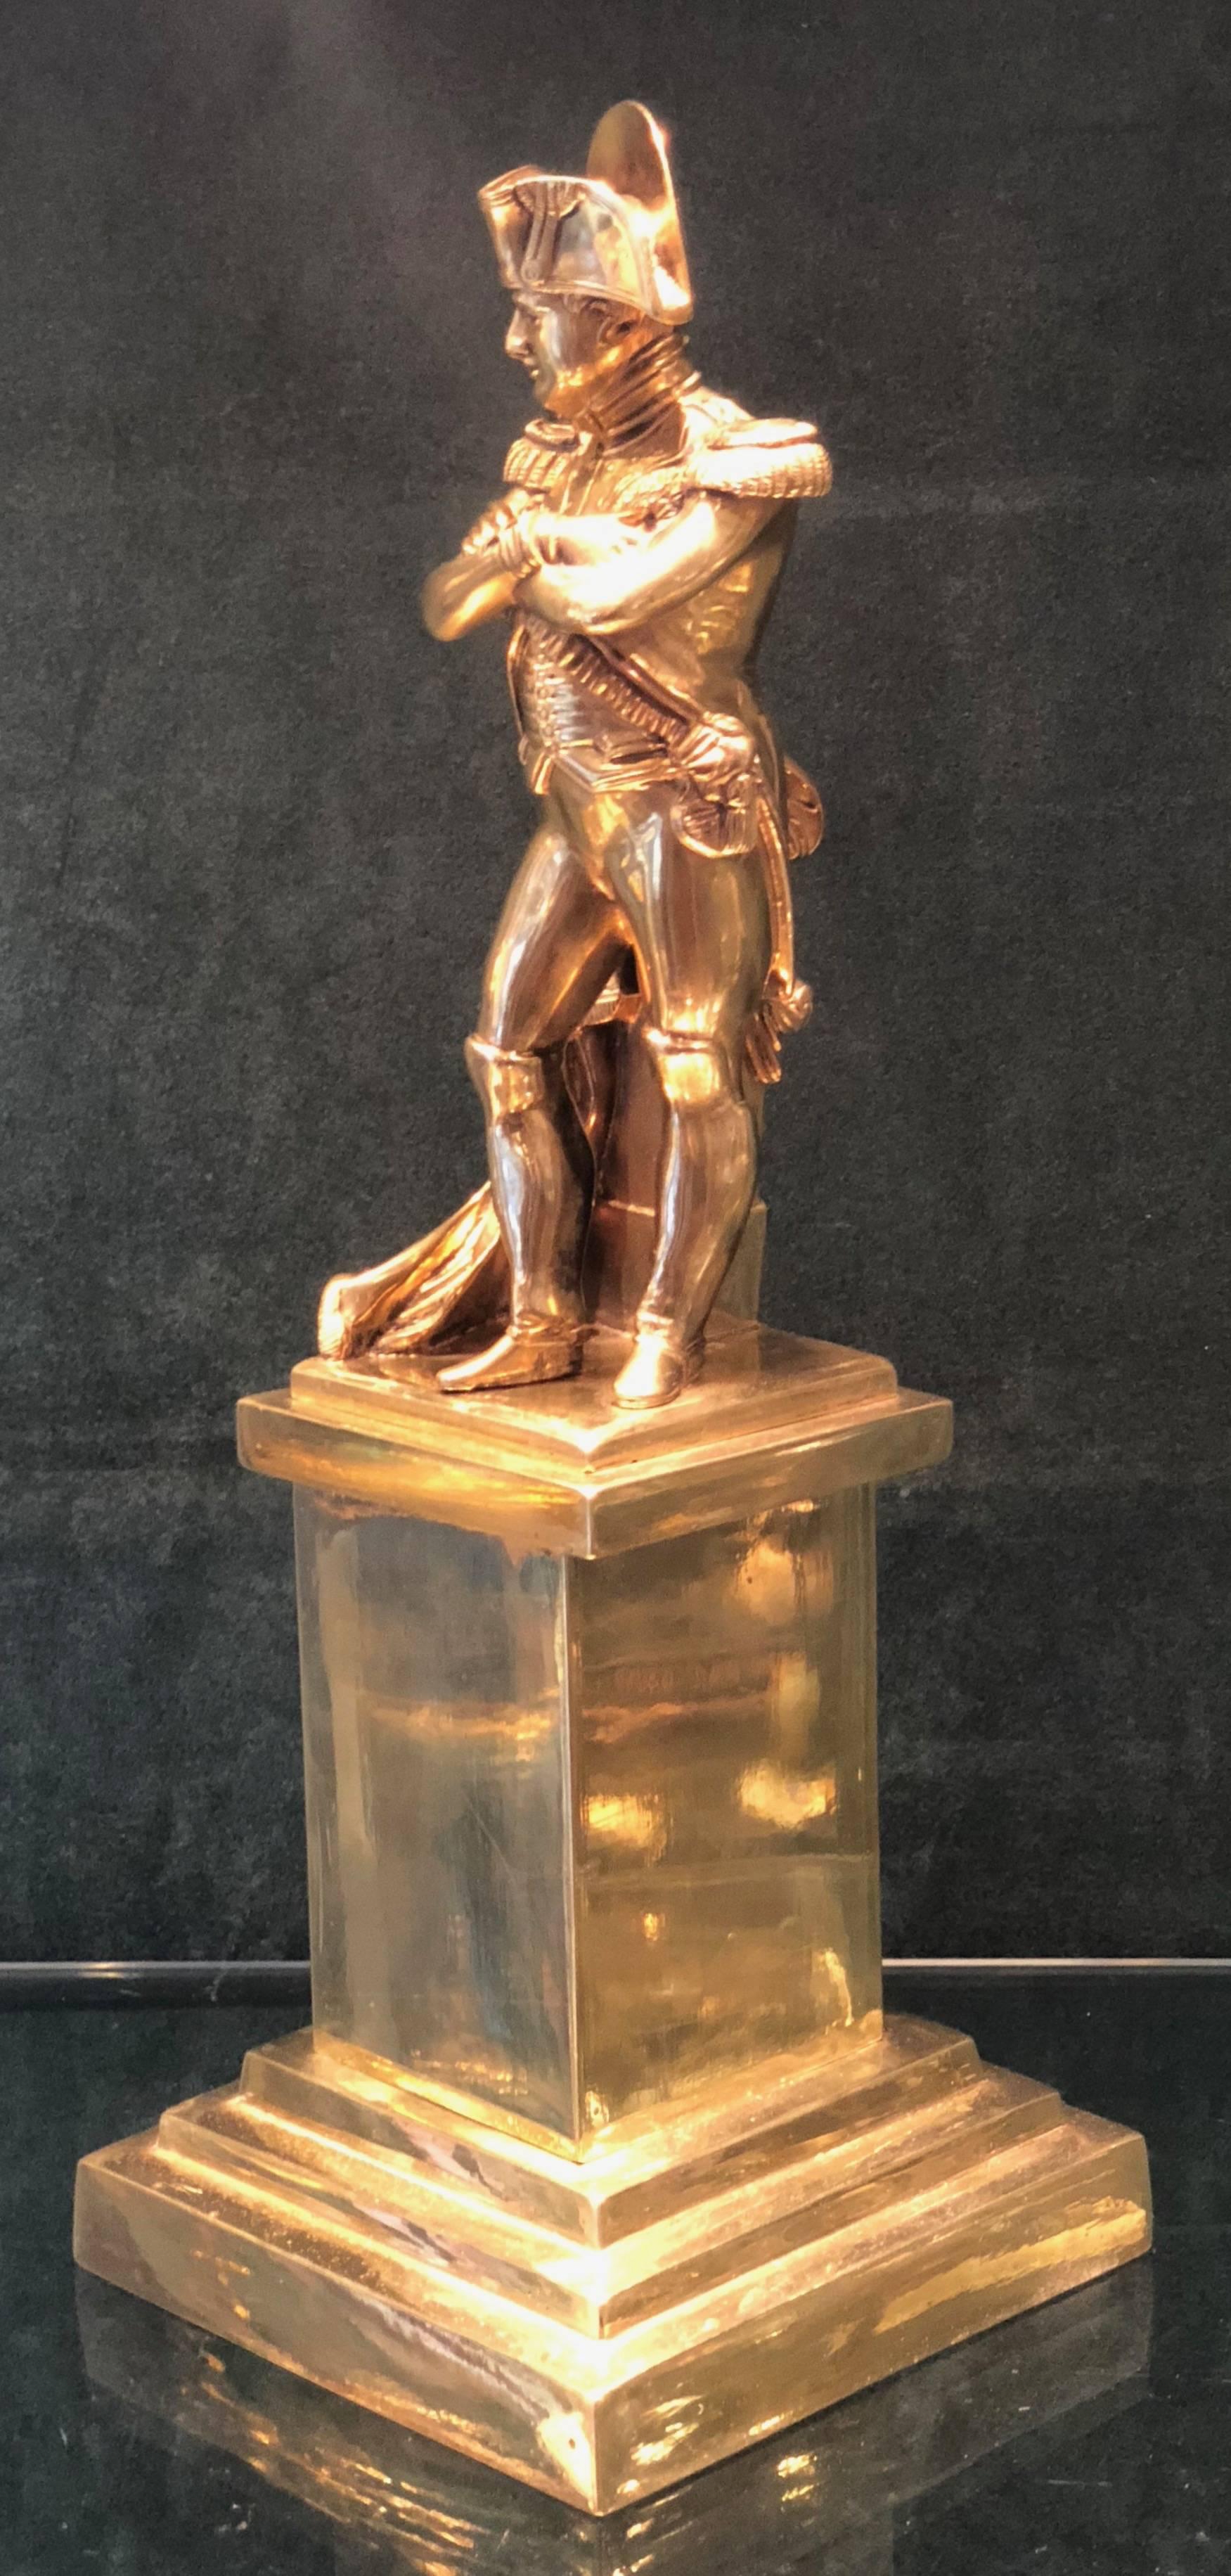 Fine quality ormolu gilded bronze of Napoleon.

He stands 14 1/2